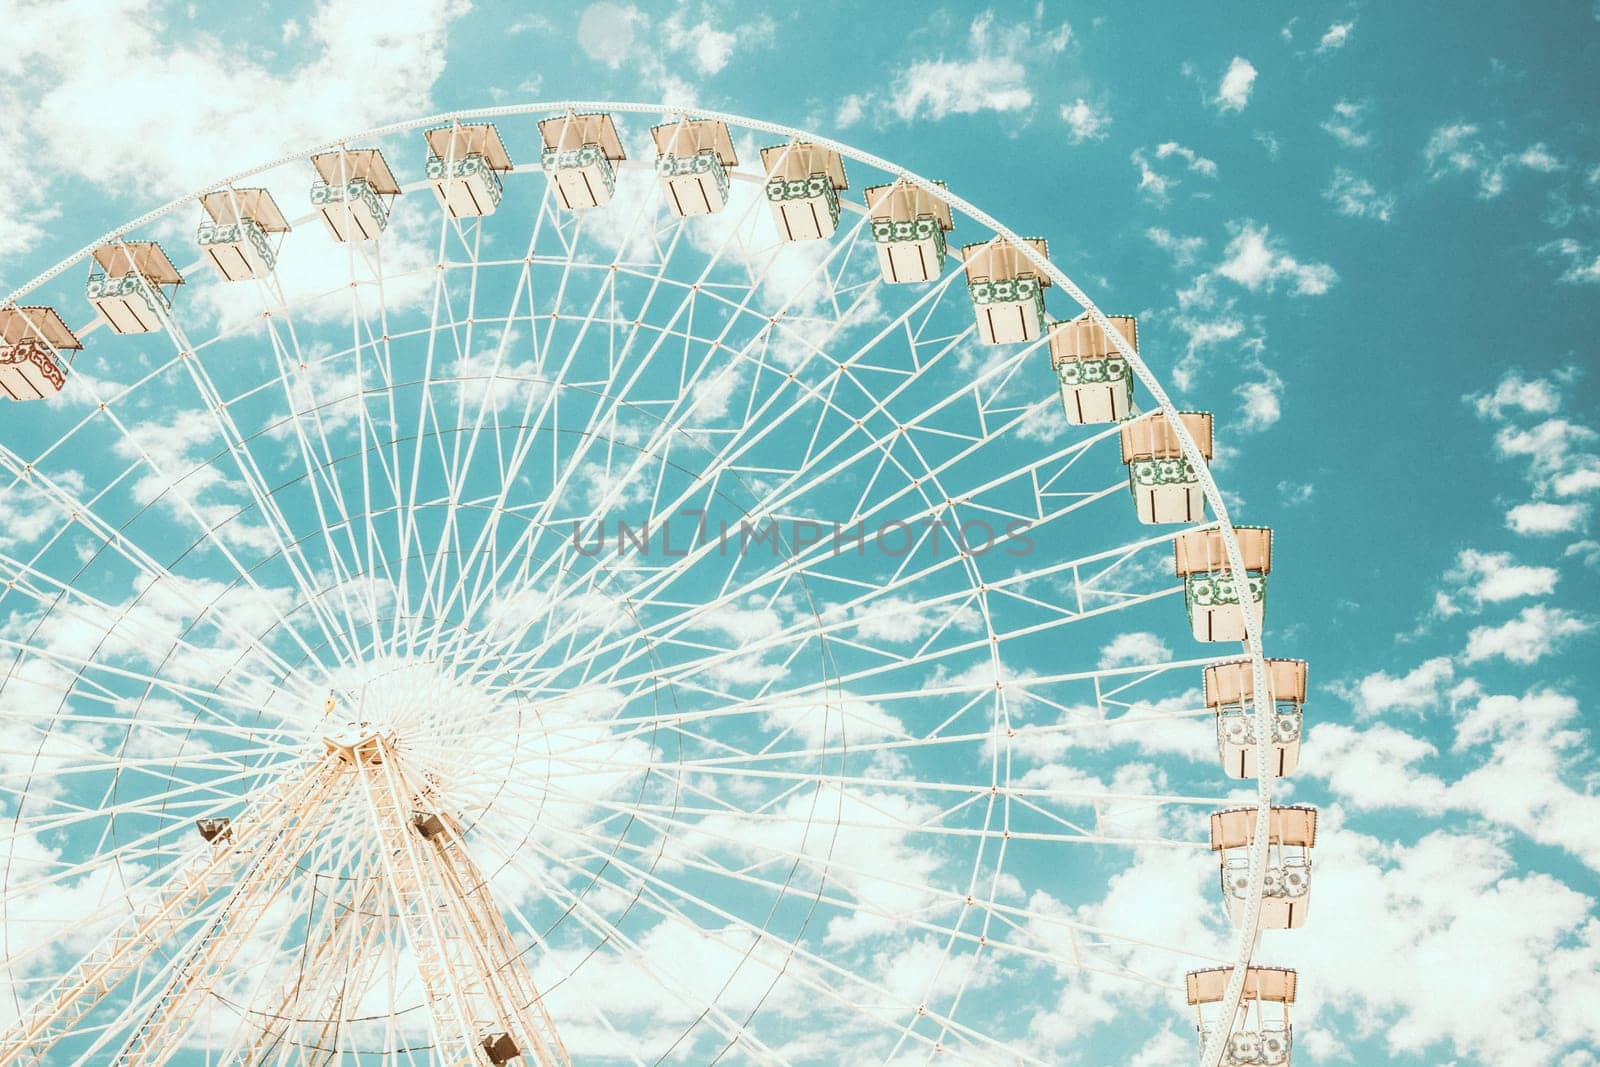 Ferris wheel of fair and amusement park by kasto